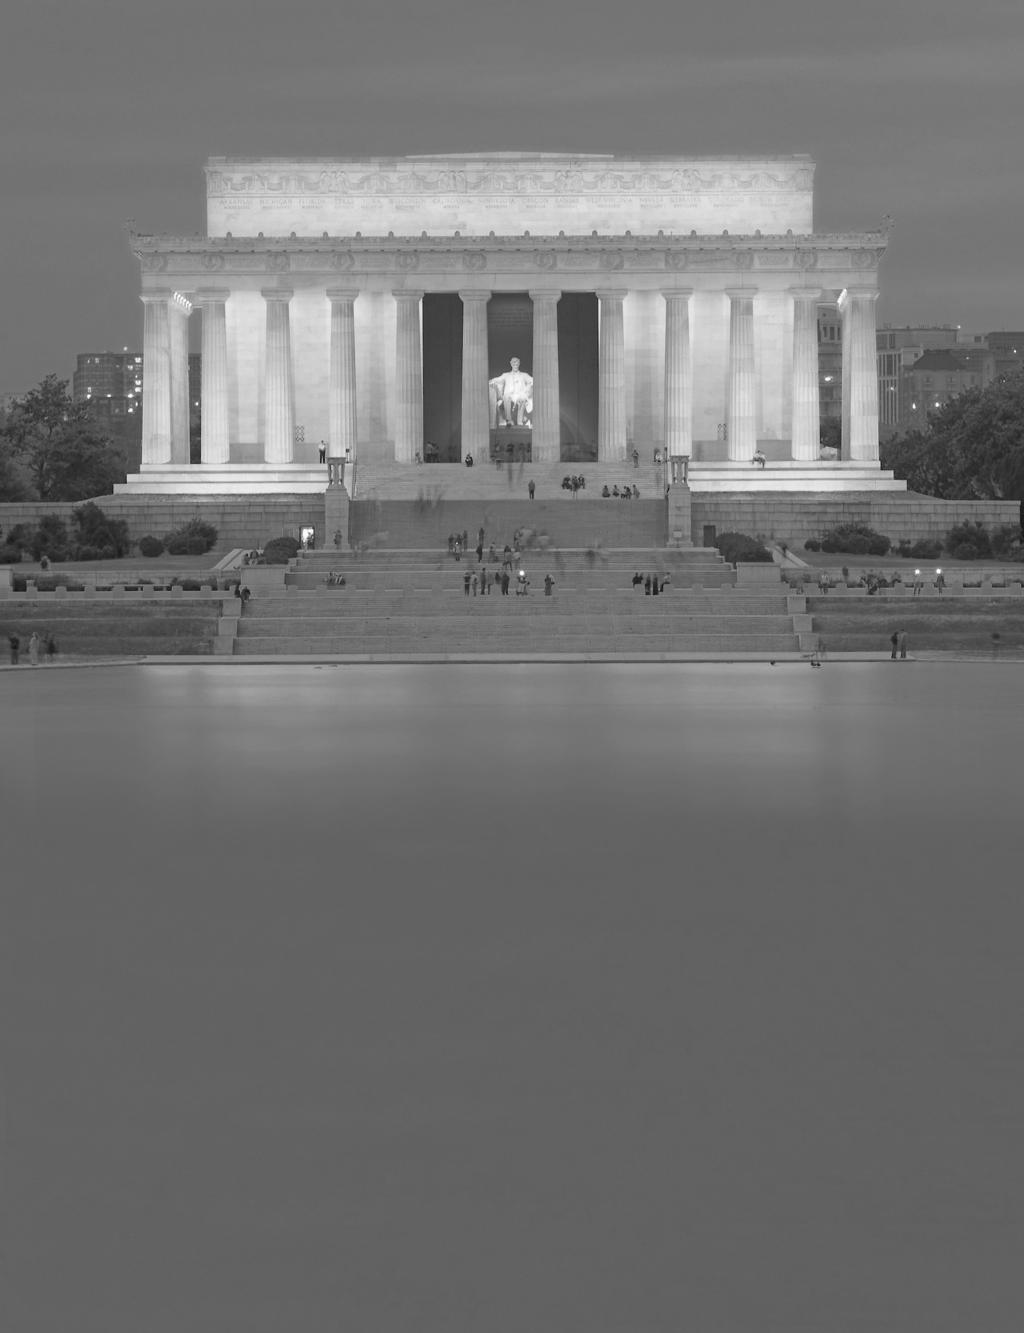 urmoments/123rf Stock Photo Monuments of Washington, D.C. Shutterstock.